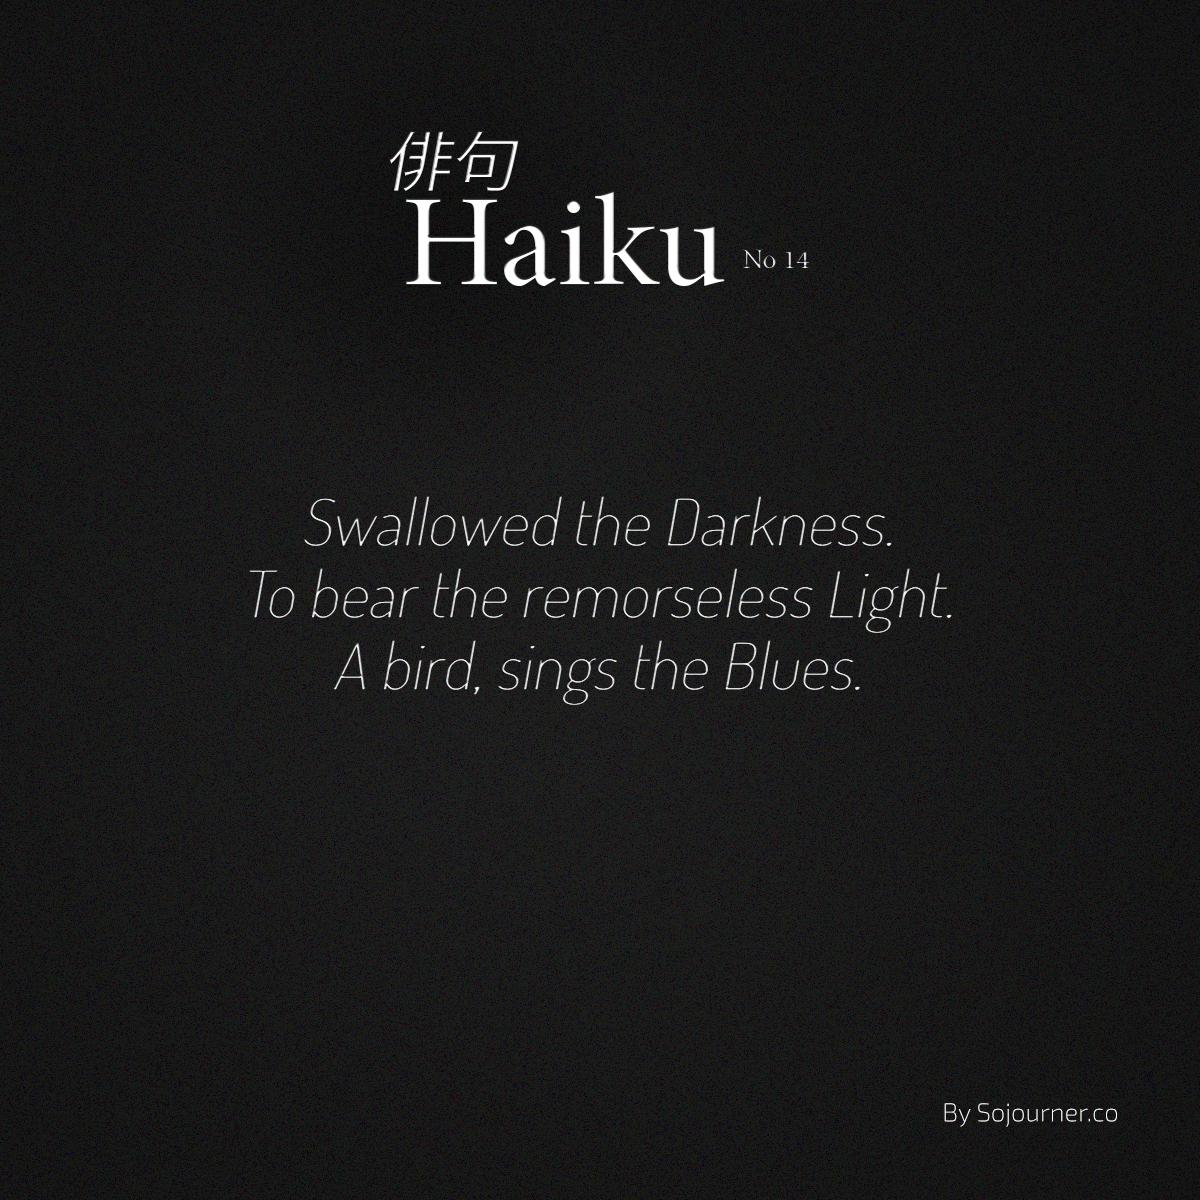 indefiniteloop.com - Haiku No. 14 - The Blues.